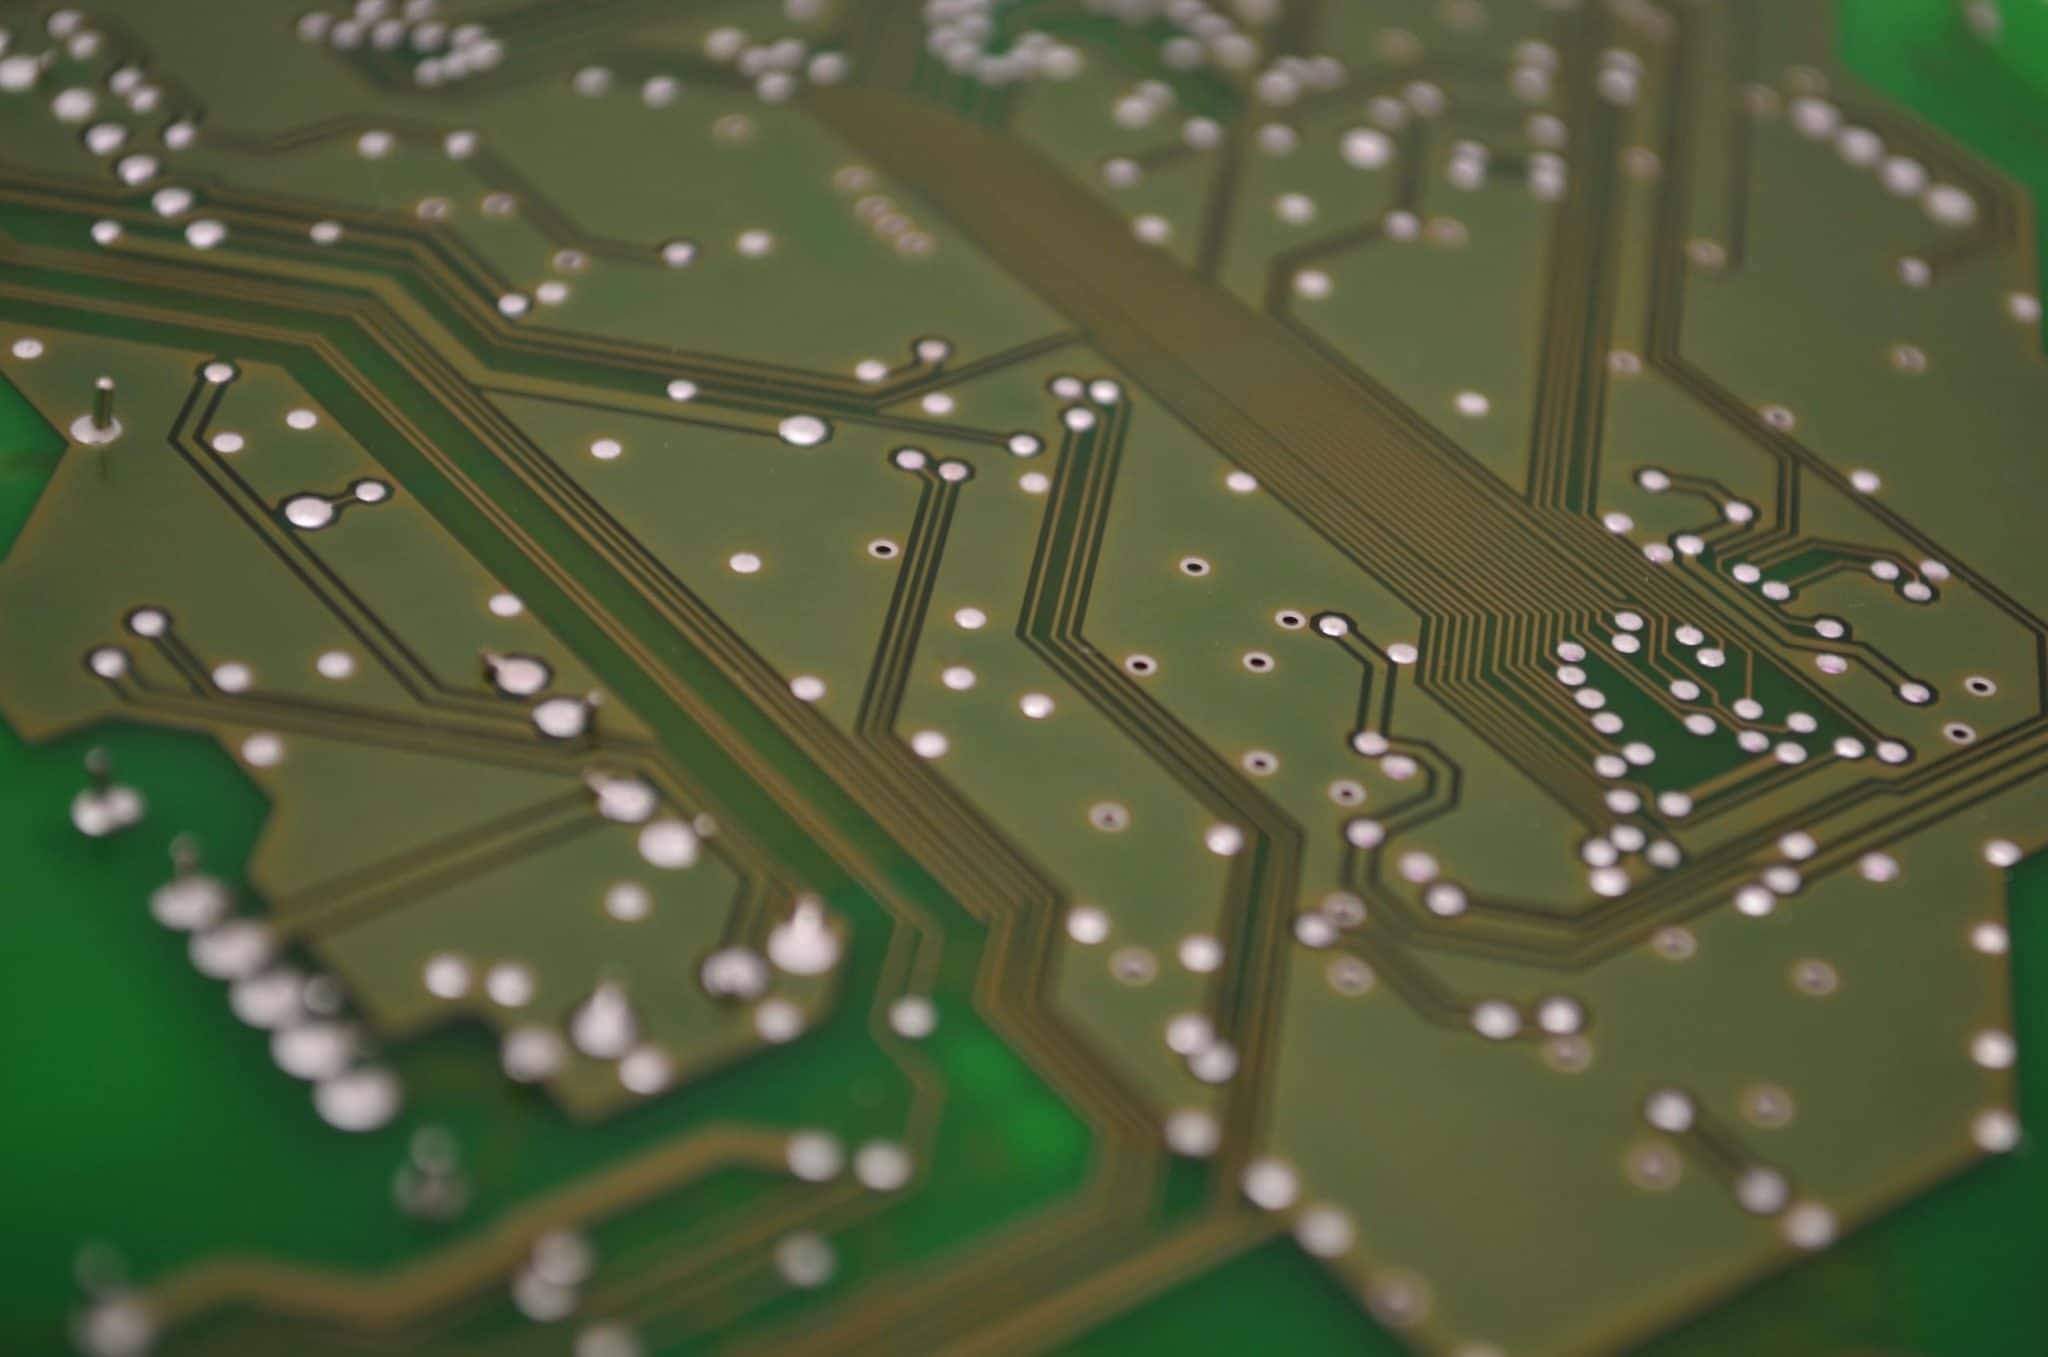 Close-up image of a computer circuit